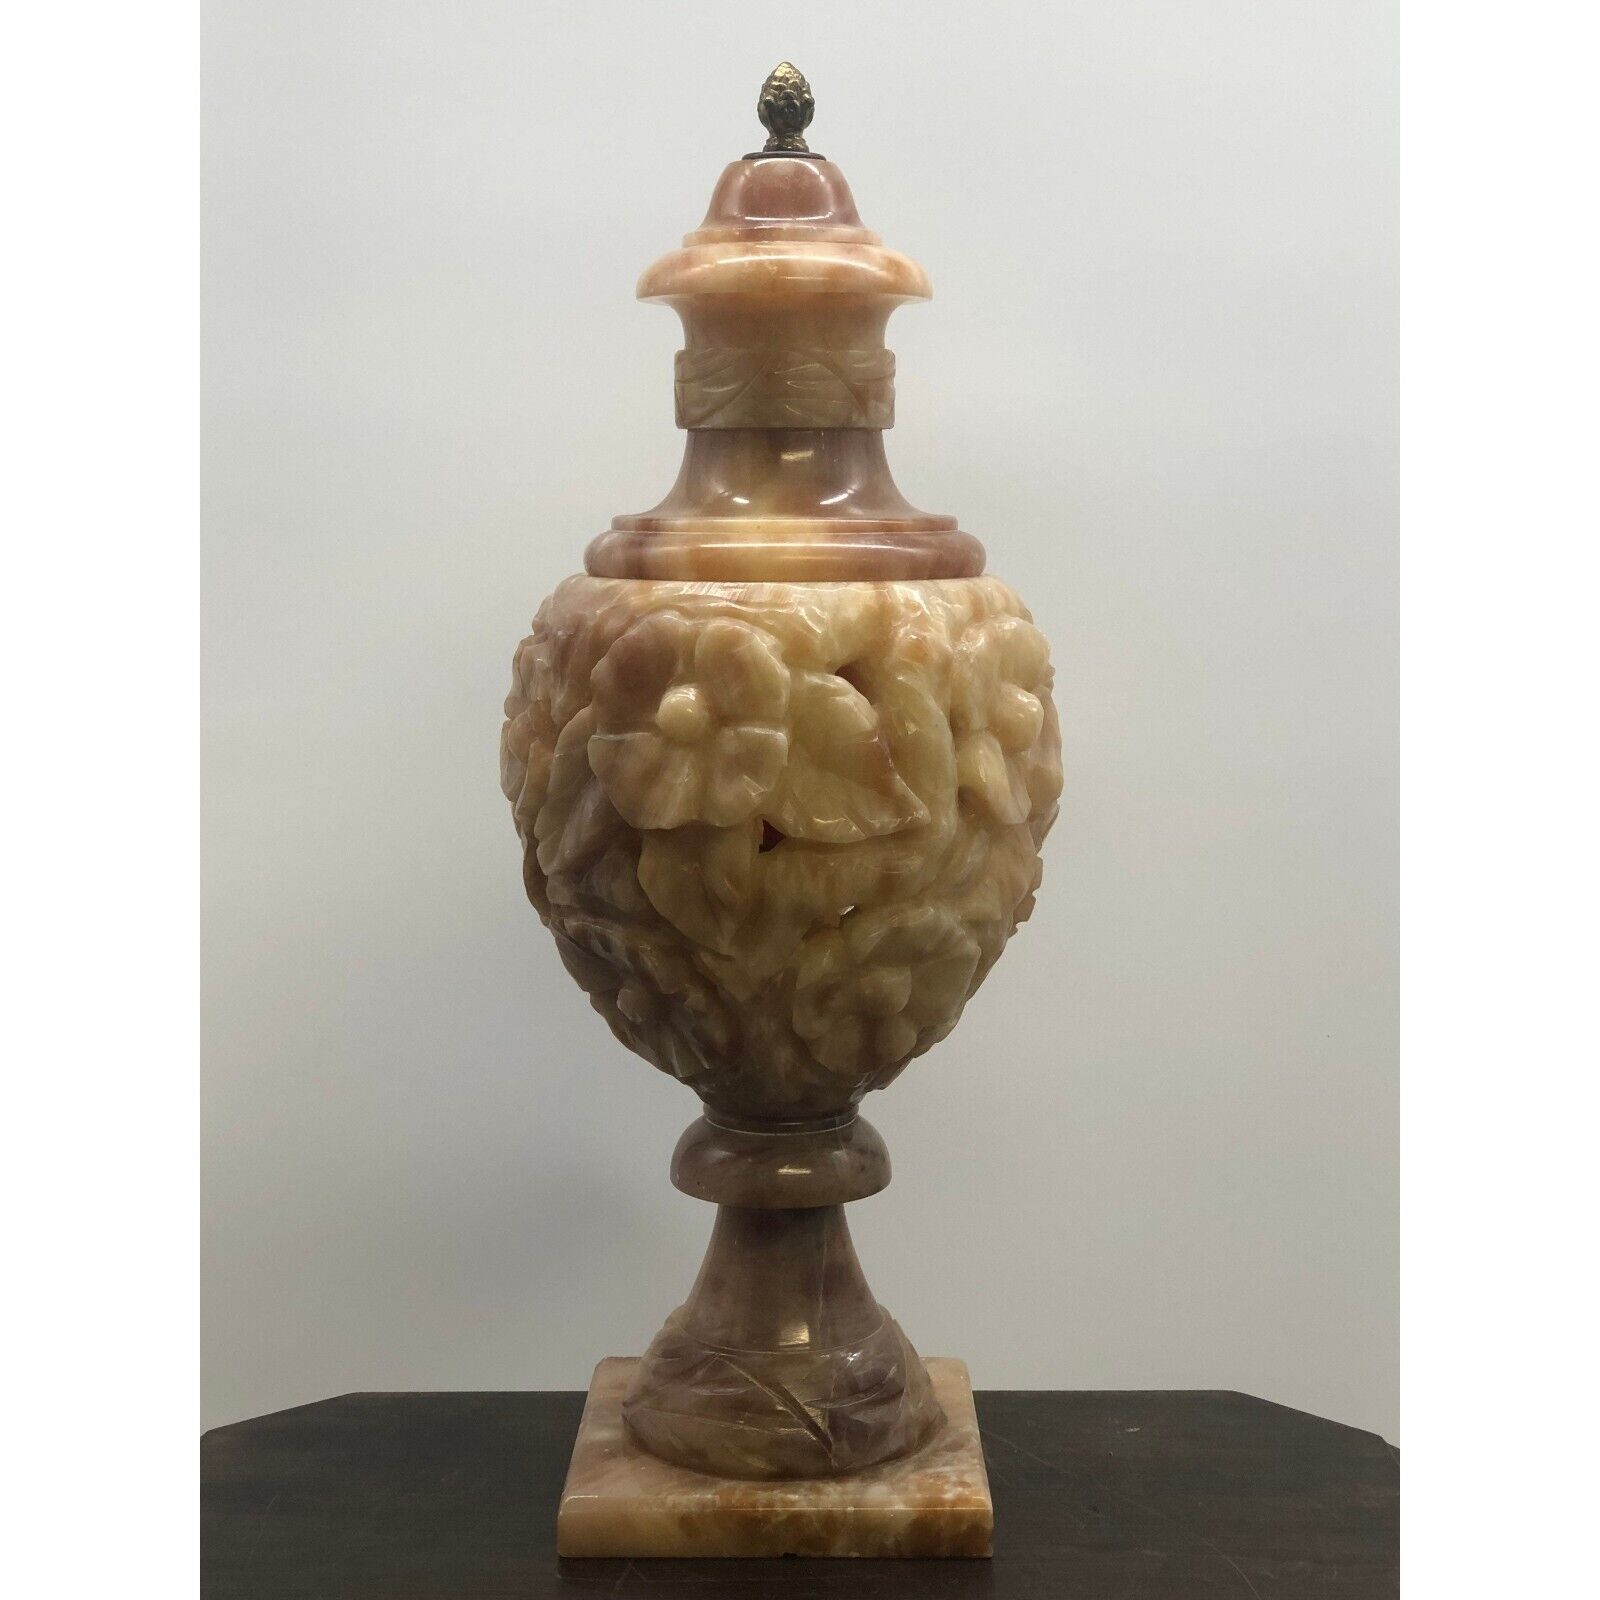 Antique 1940’s Art Deco Italian Carved Alabaster Newel Post Lamp Urn